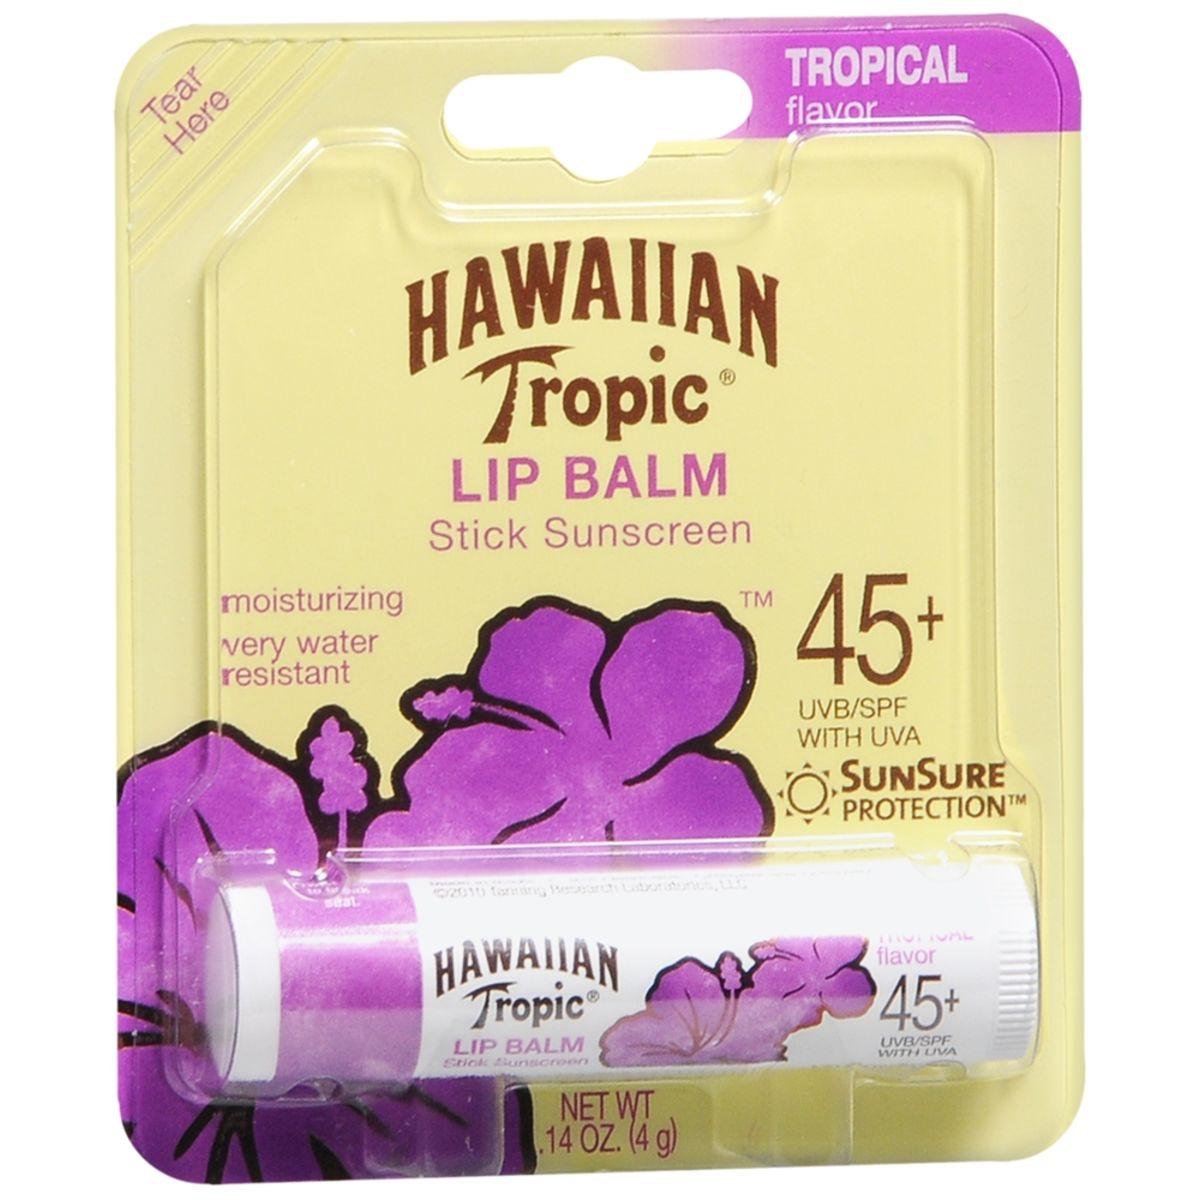 Tropical Lip Balm Stick Sunscreen SPF 45+